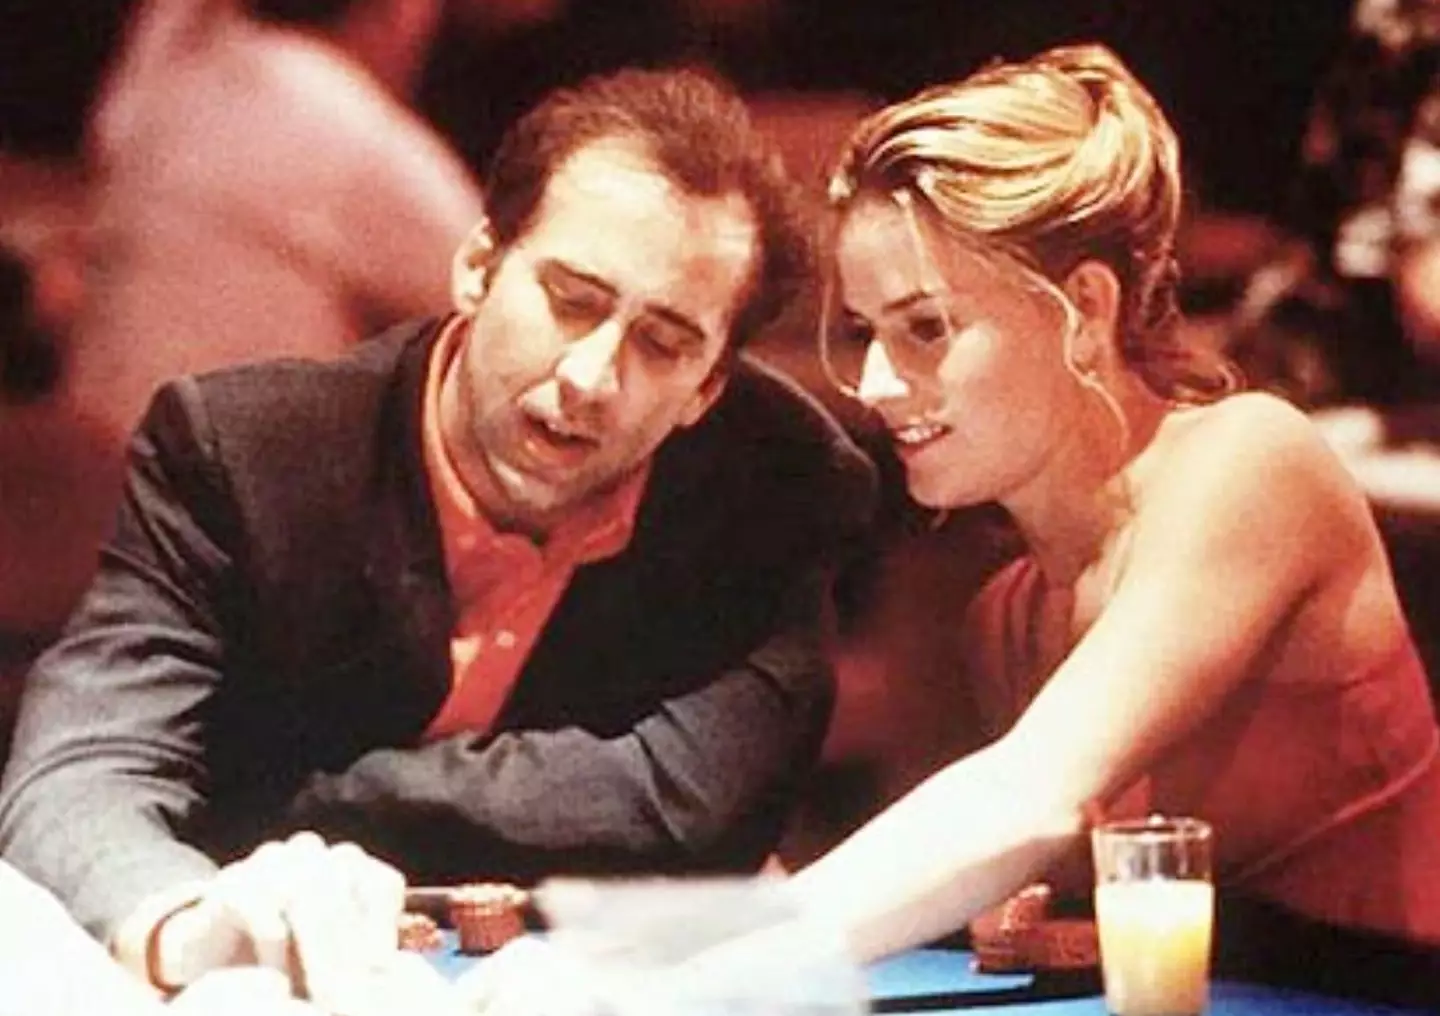 Nicolas Cage won an Oscar for Leaving Las Vegas.